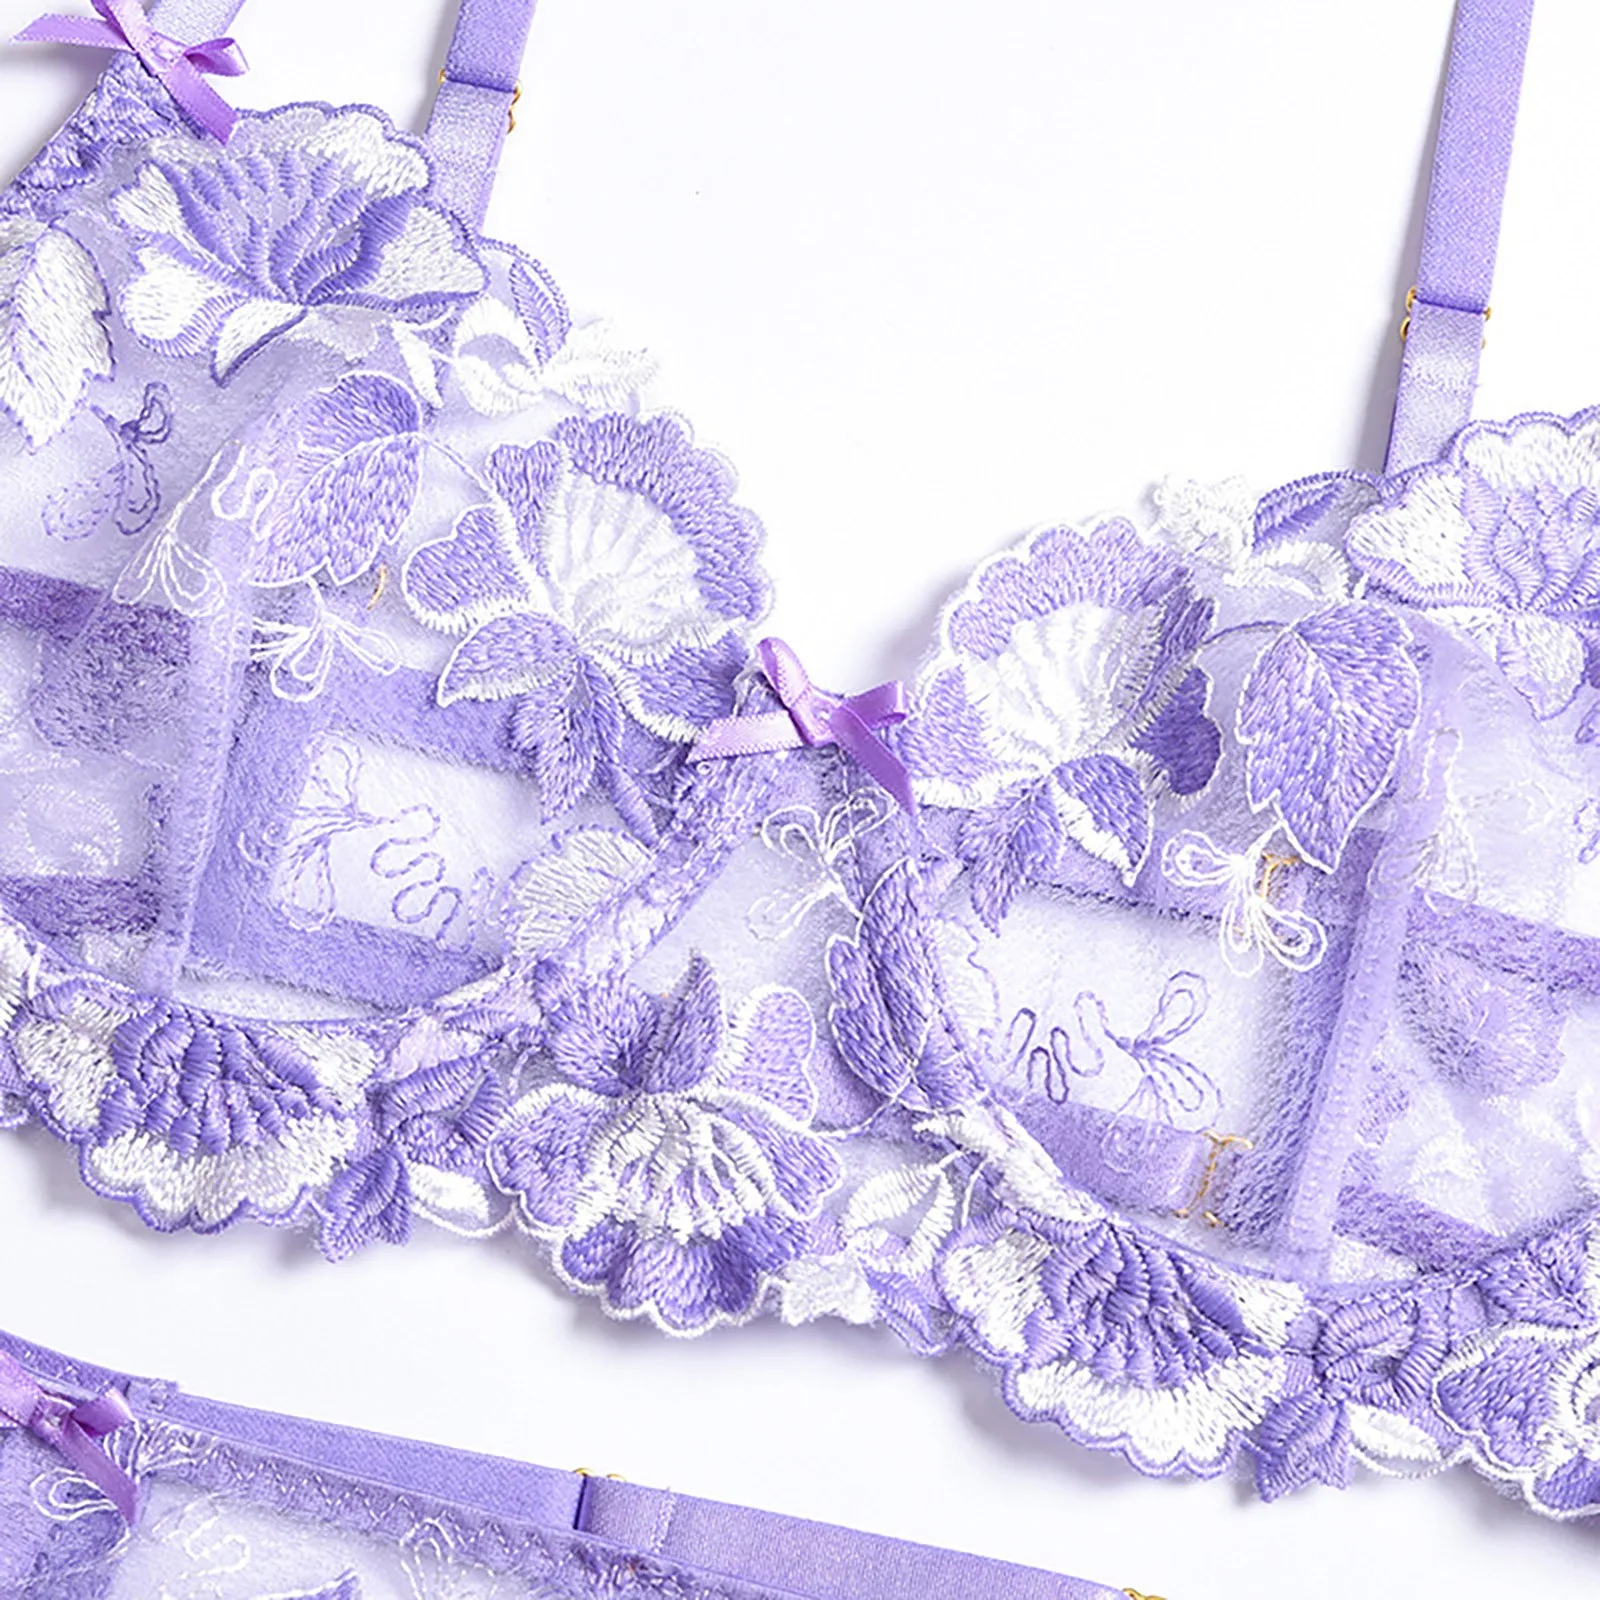 Fashion Women's Sexy Flower Embroidery Lace See-through Bra G-String Underwear Garter Three-Piece Lingerie Set Sleepwear#p3 panty sets